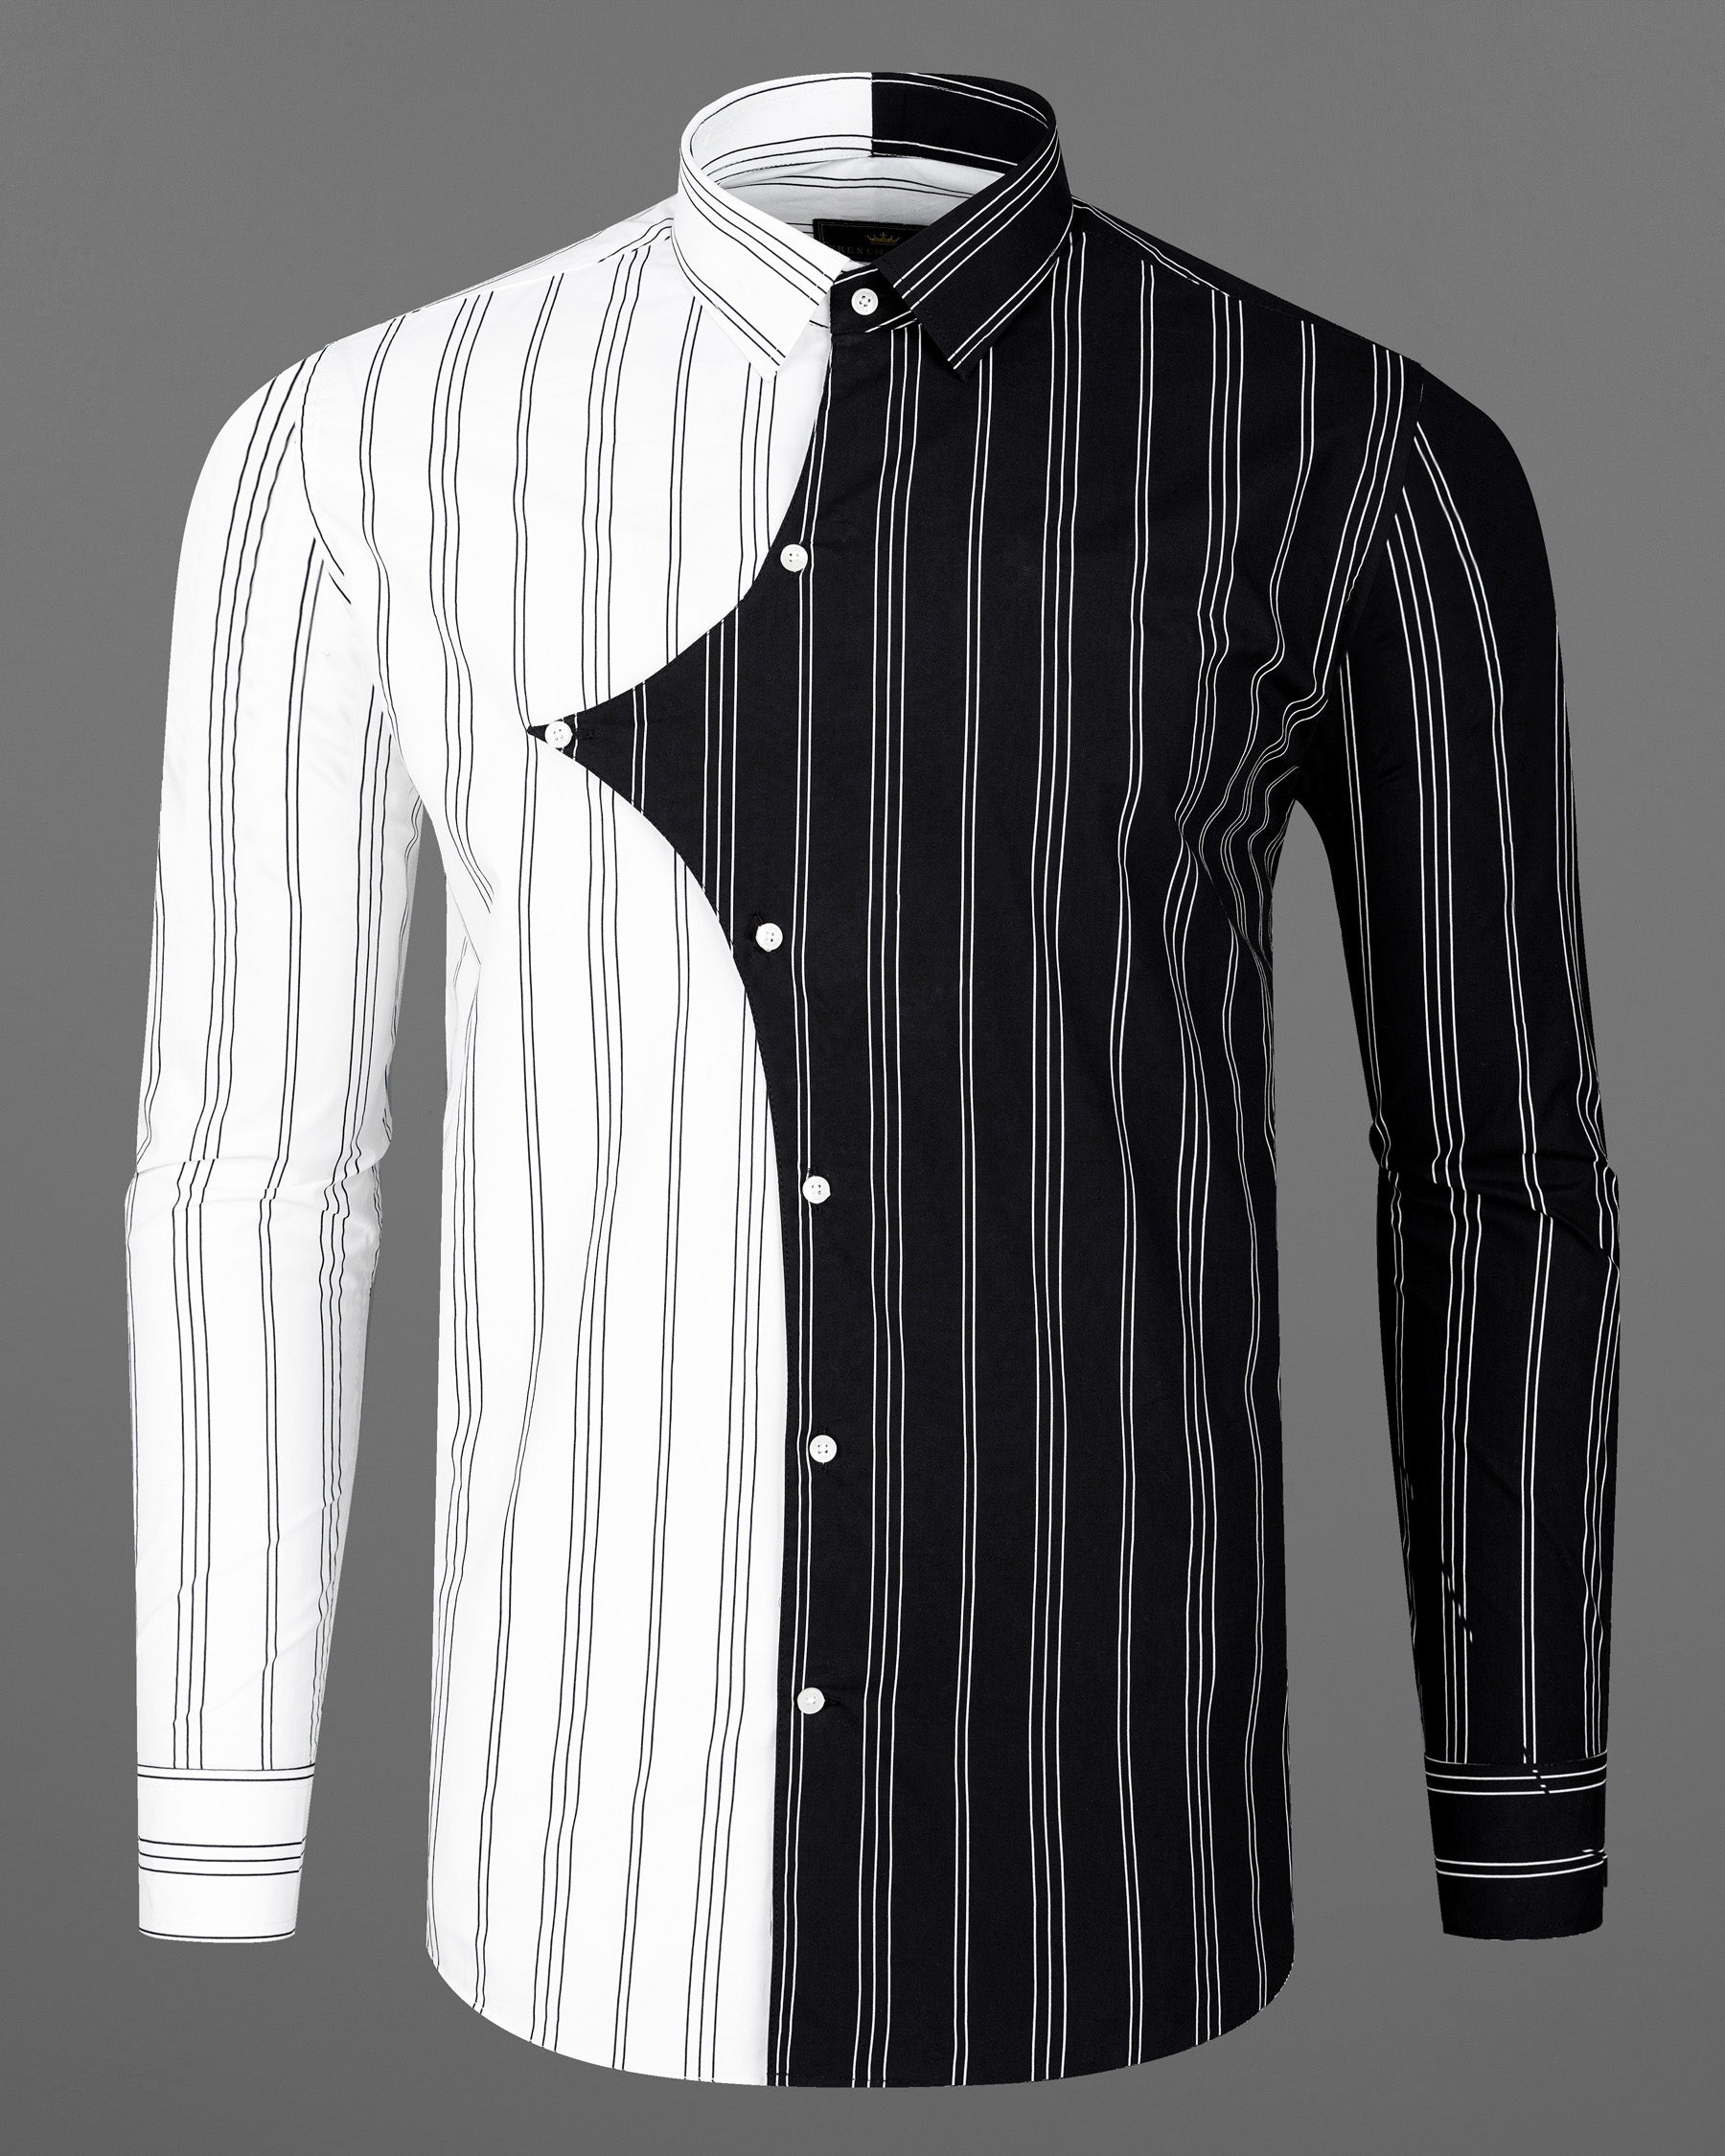 Half White With Half Black Pin Striped Twill Premium Cotton Designer Shirt7899-D22 -38,7899-D22 -H-38,7899-D22 -39,7899-D22 -H-39,7899-D22 -40,7899-D22 -H-40,7899-D22 -42,7899-D22 -H-42,7899-D22 -44,7899-D22 -H-44,7899-D22 -46,7899-D22 -H-46,7899-D22 -48,7899-D22 -H-48,7899-D22 -50,7899-D22 -H-50,7899-D22 -52,7899-D22 -H-52 